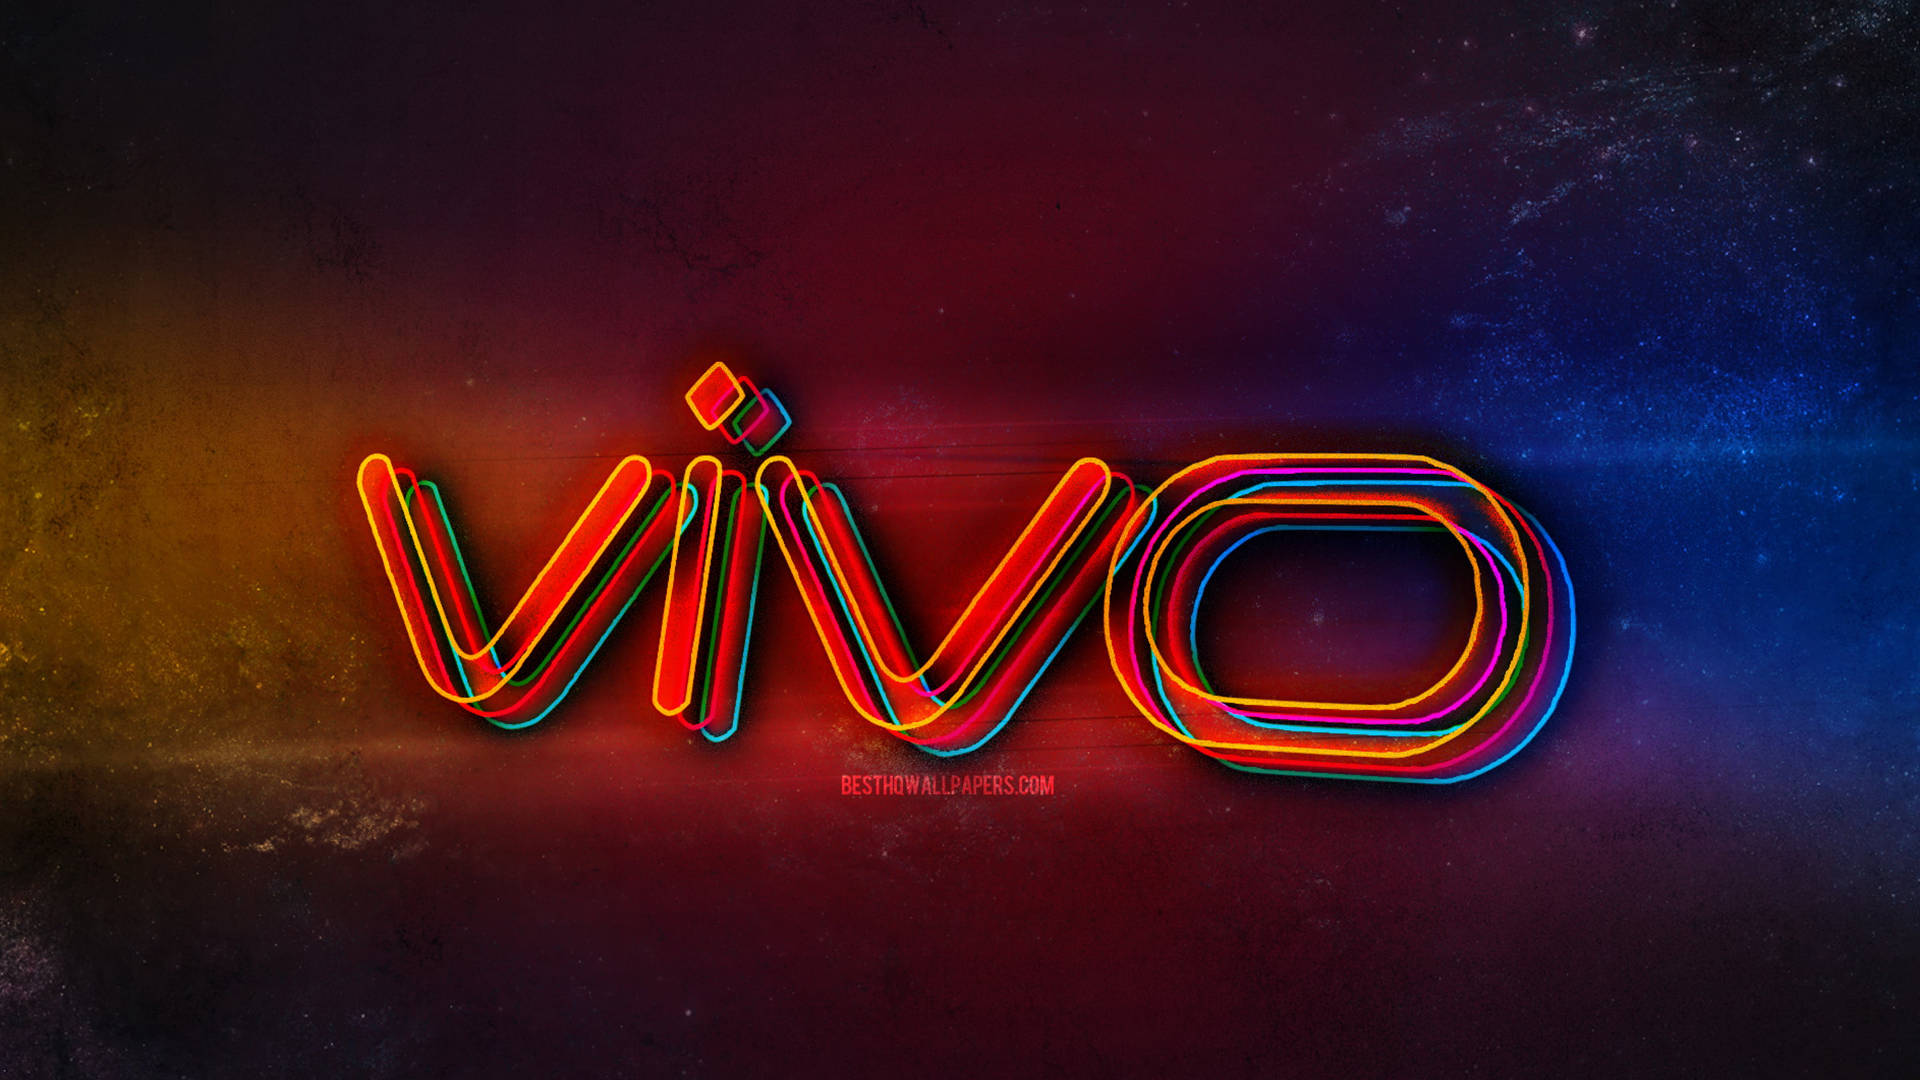 Farbenfrohesdunkles Vivo-logo Wallpaper